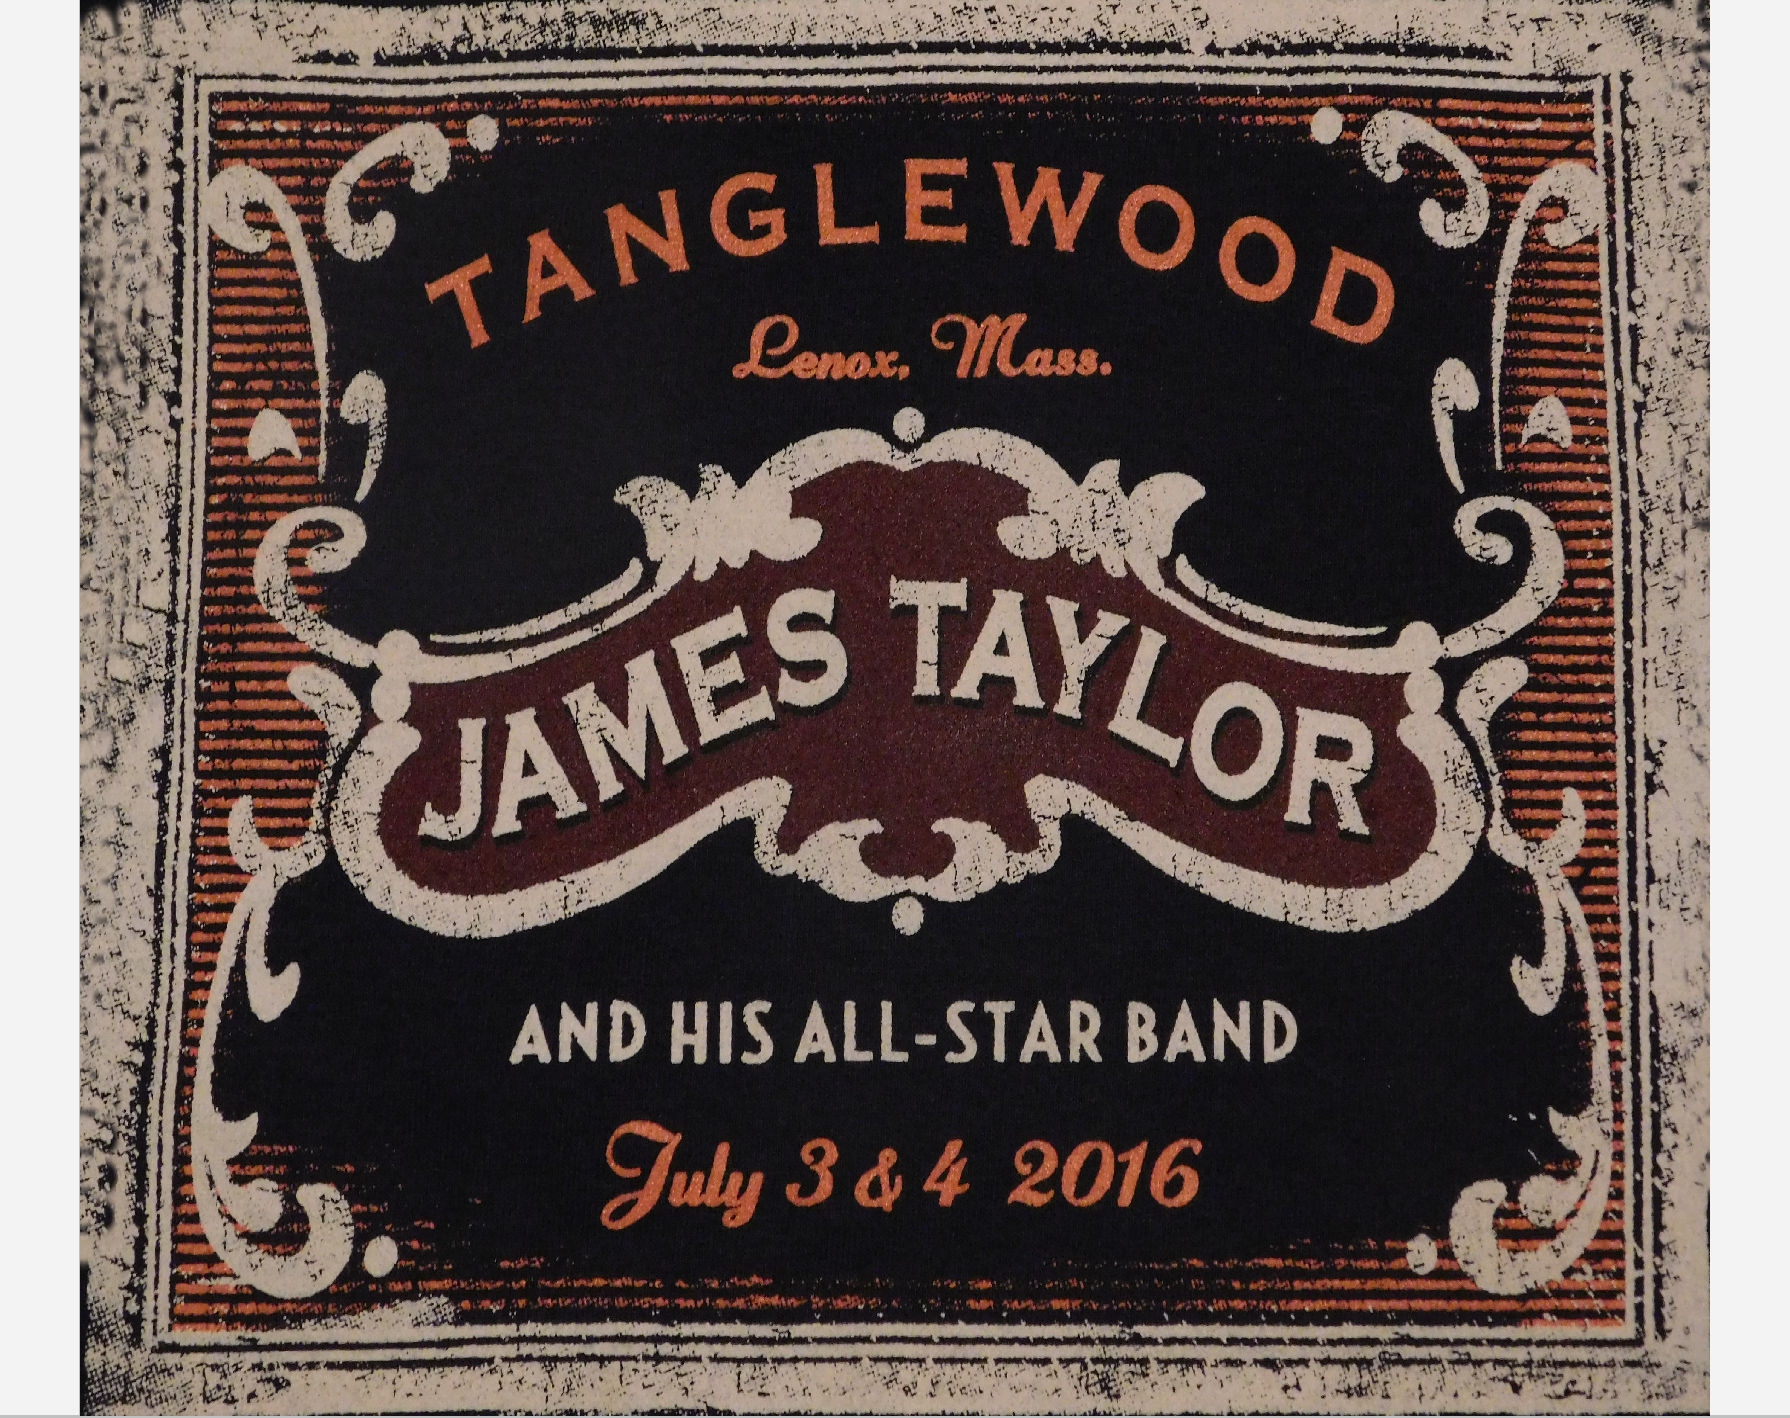 JamesTaylor2016-07-03TanglewoodLenoxMA (5).jpg